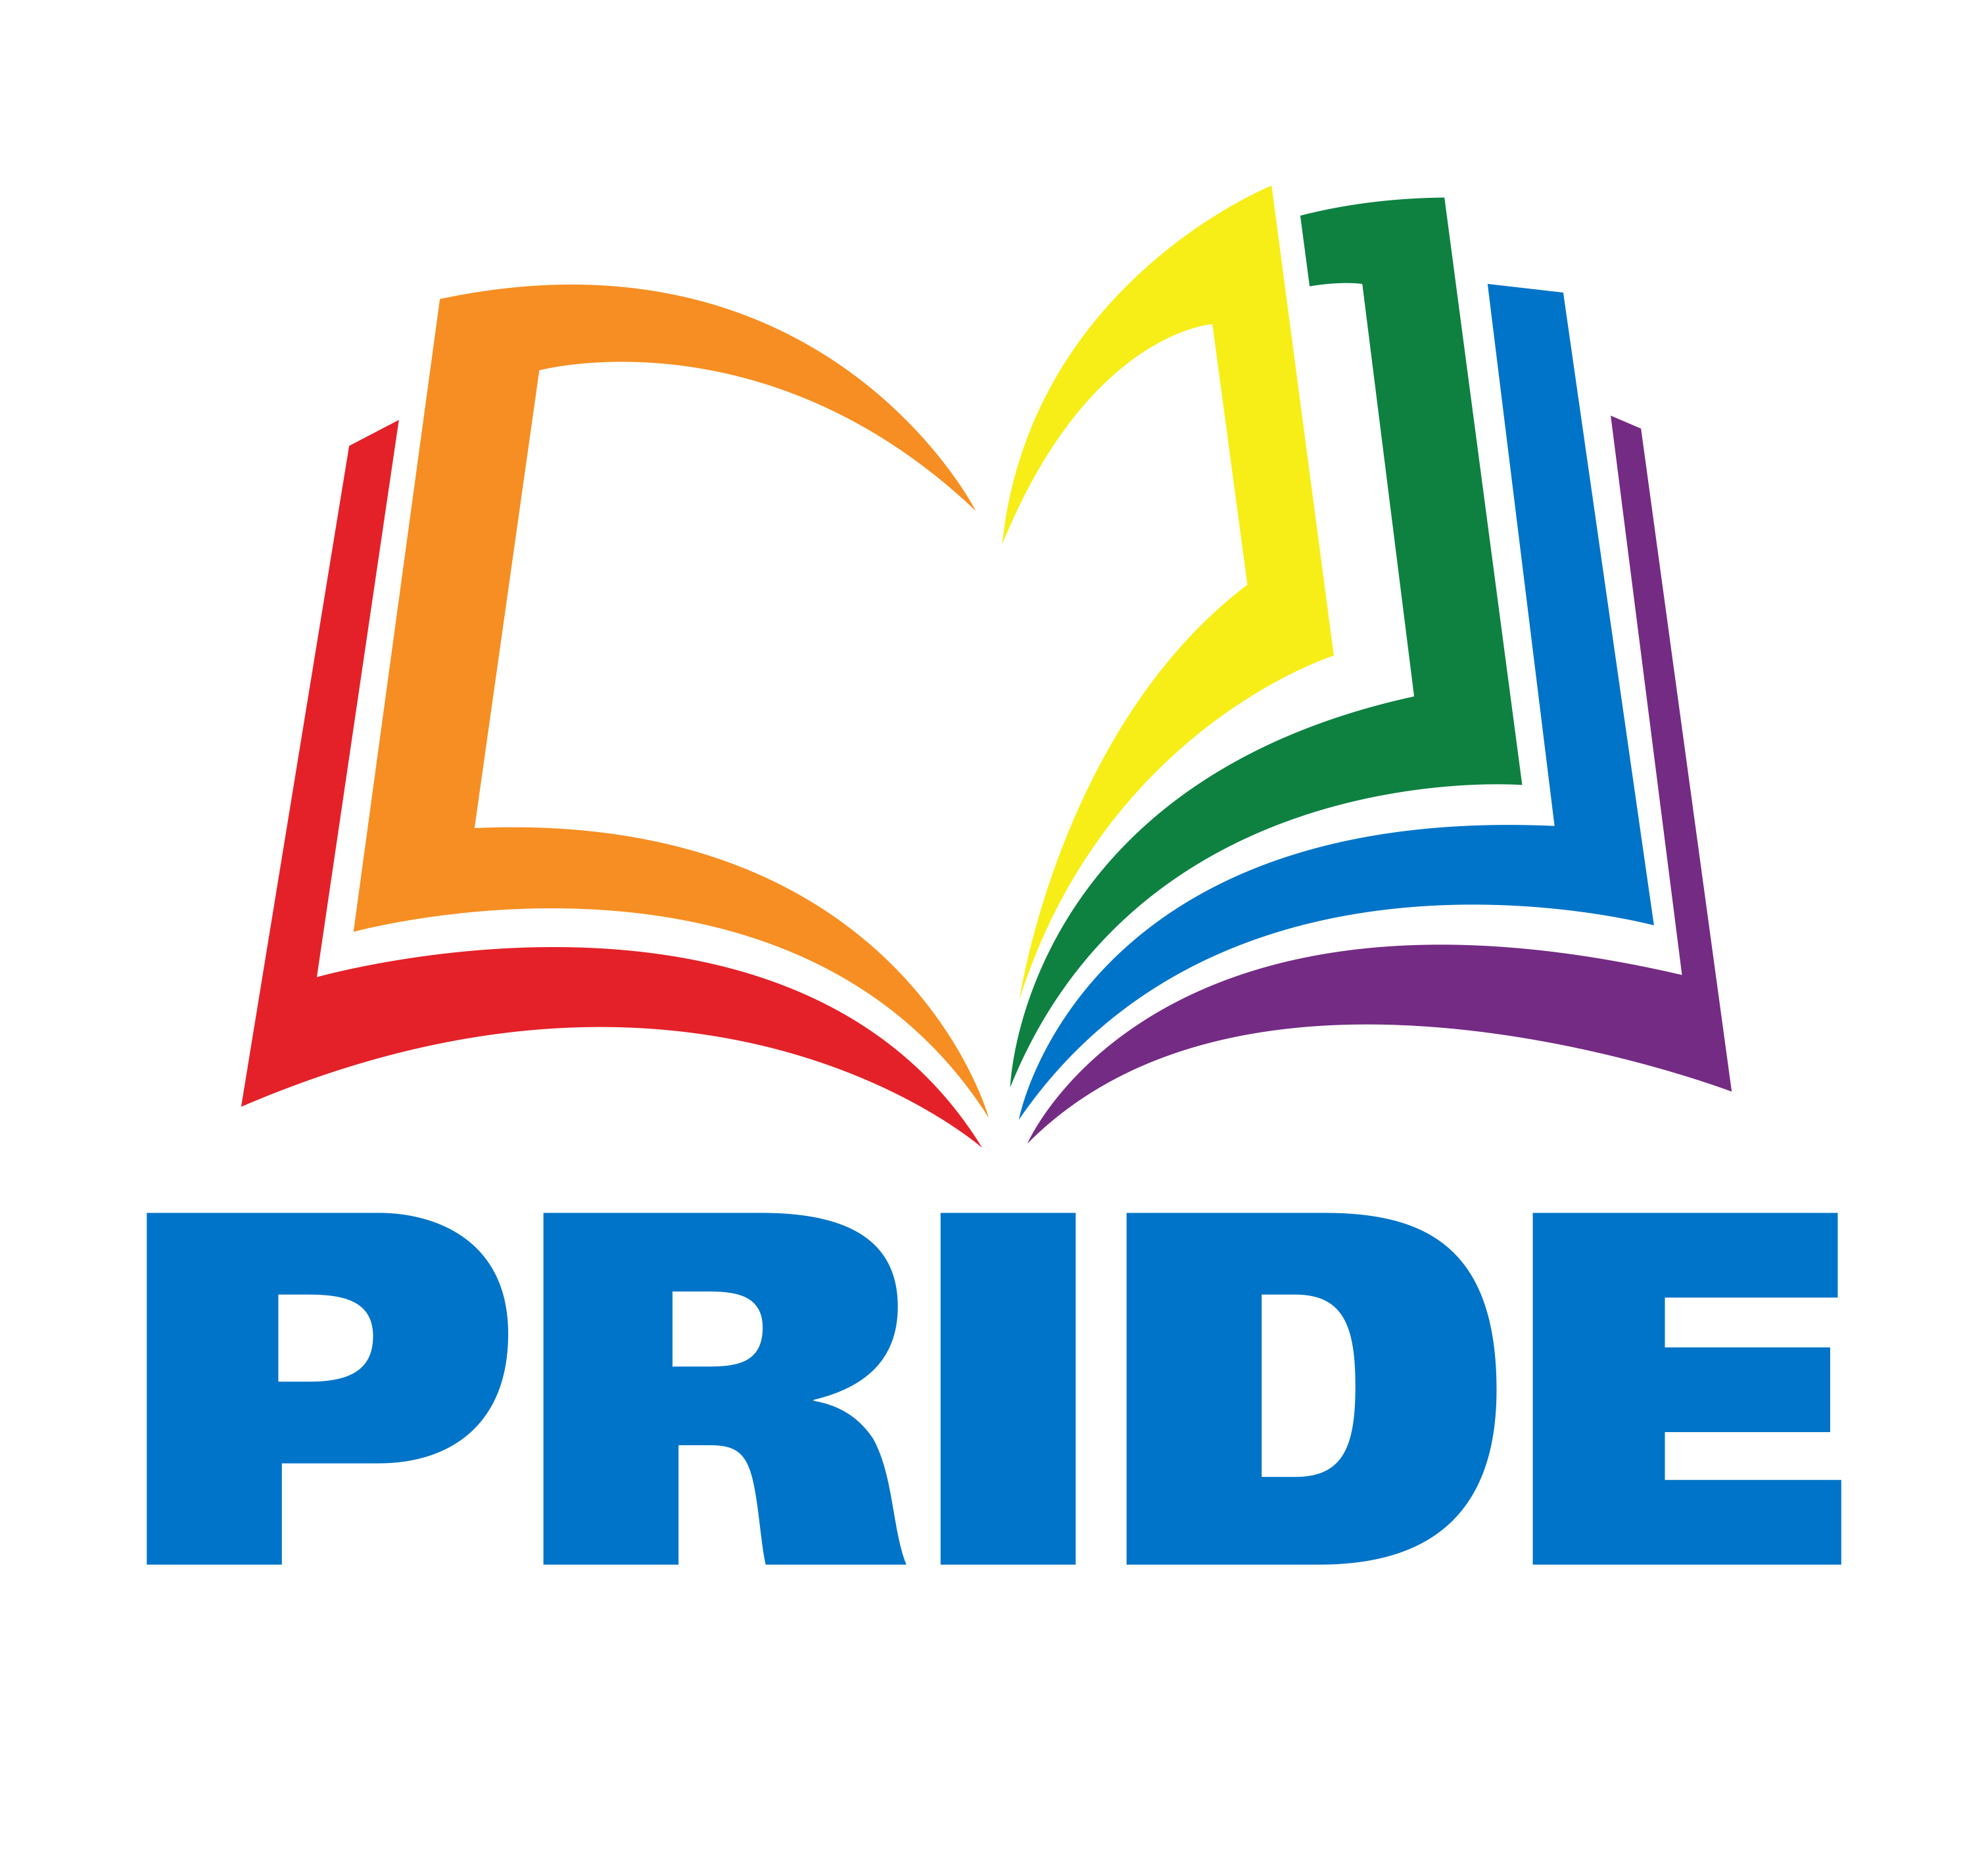 Pride book logo